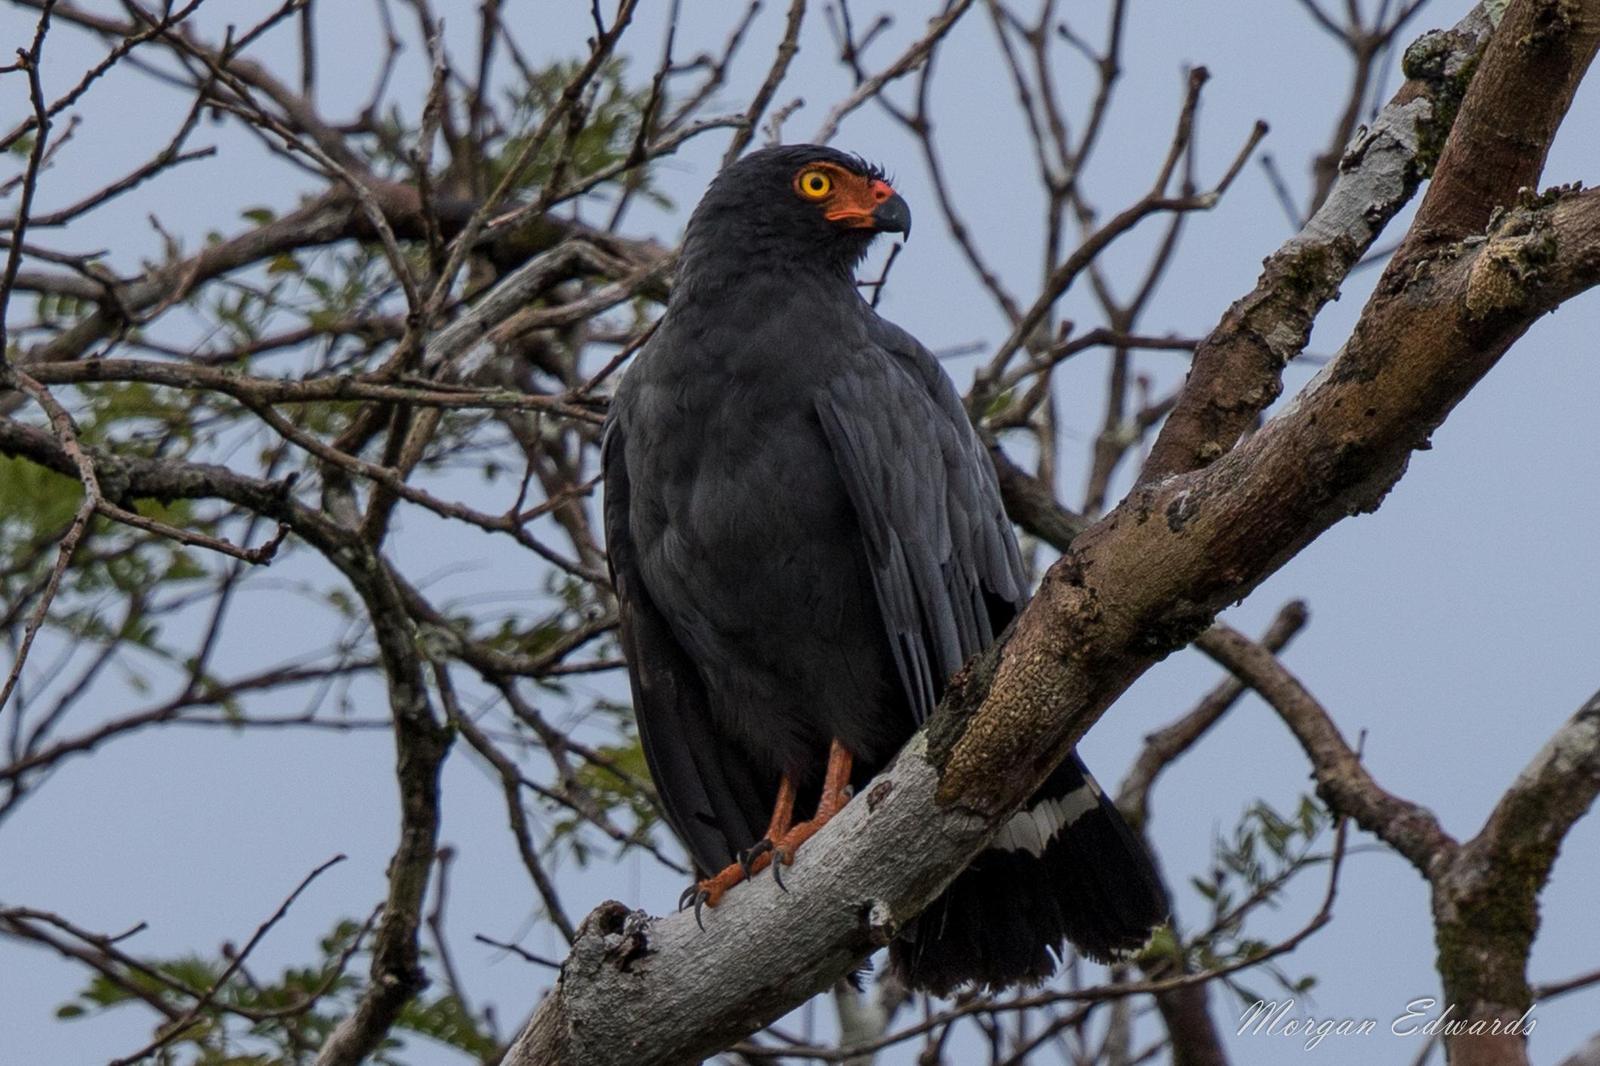 Slate-colored Hawk Photo by Morgan Edwards